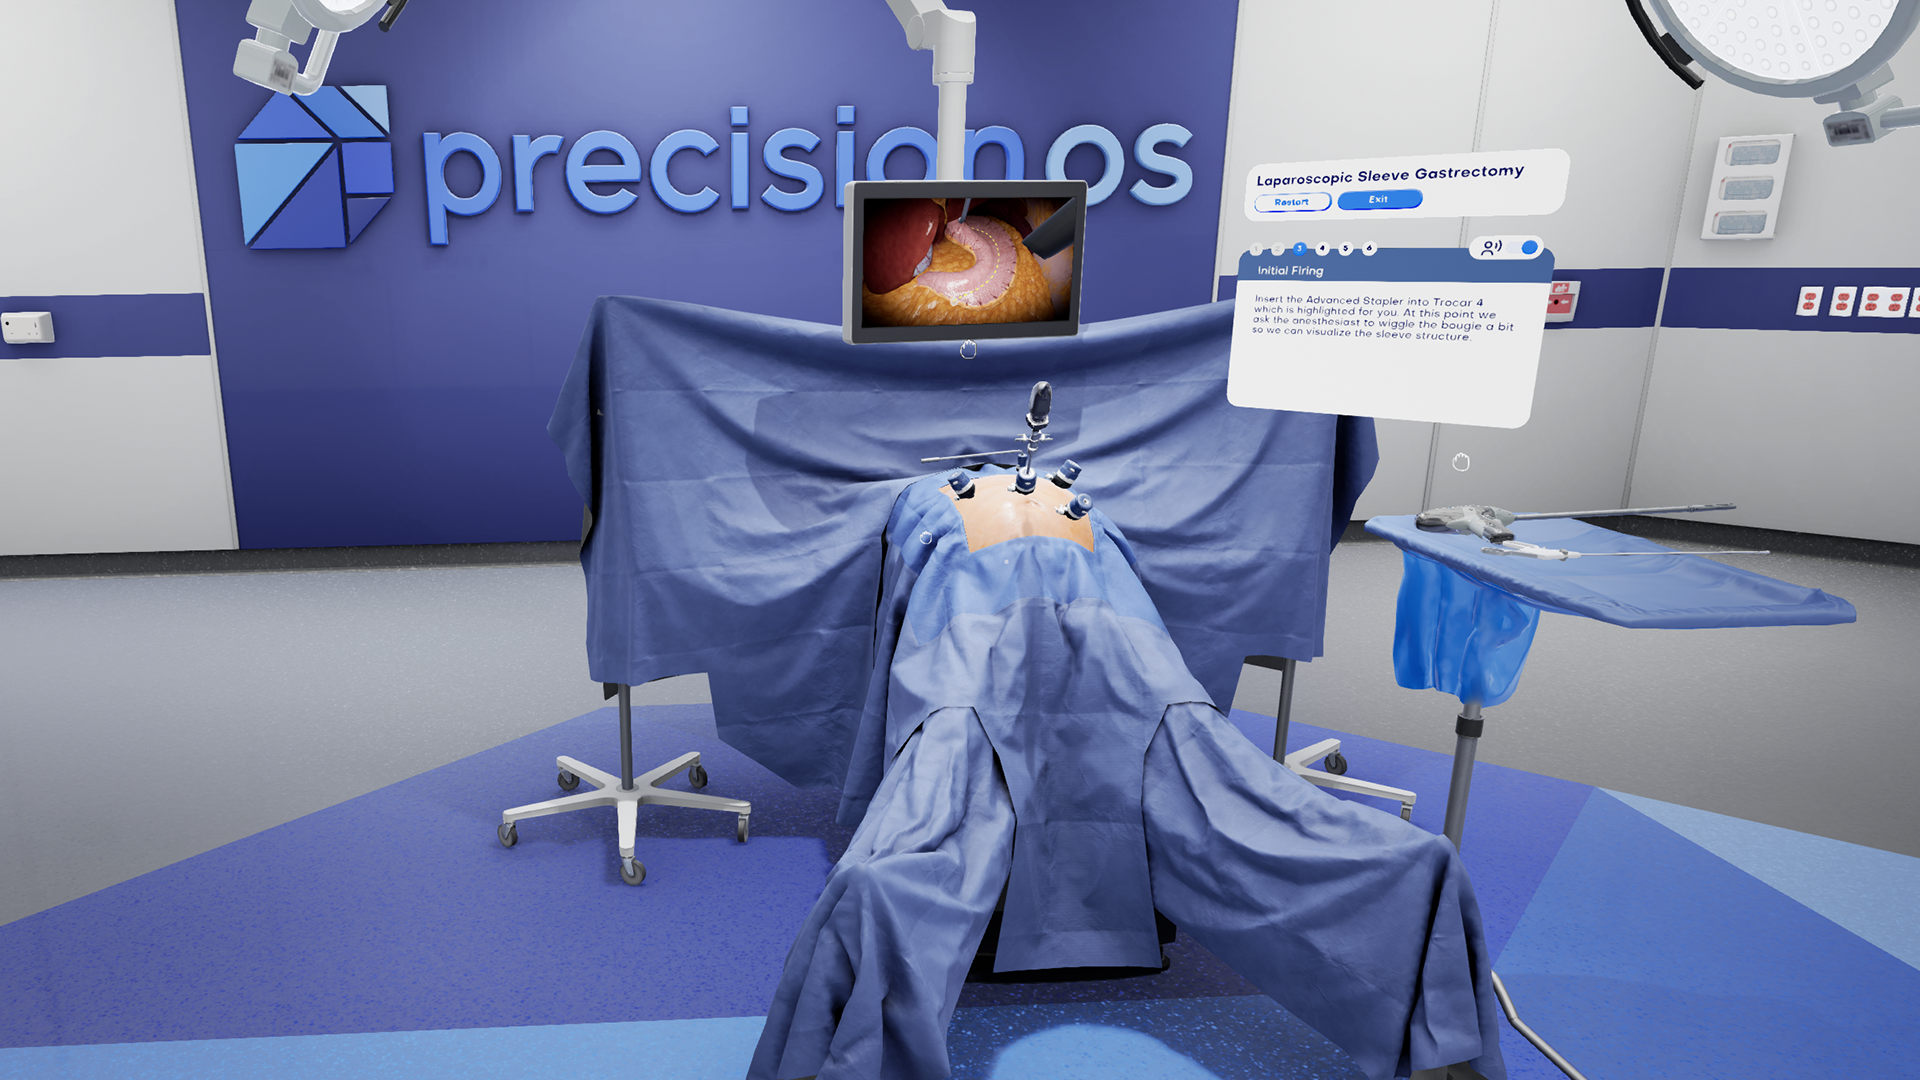 PrecisionOS Launches First Fully Interactive Robotics Platform in VR -  PrecisionOS